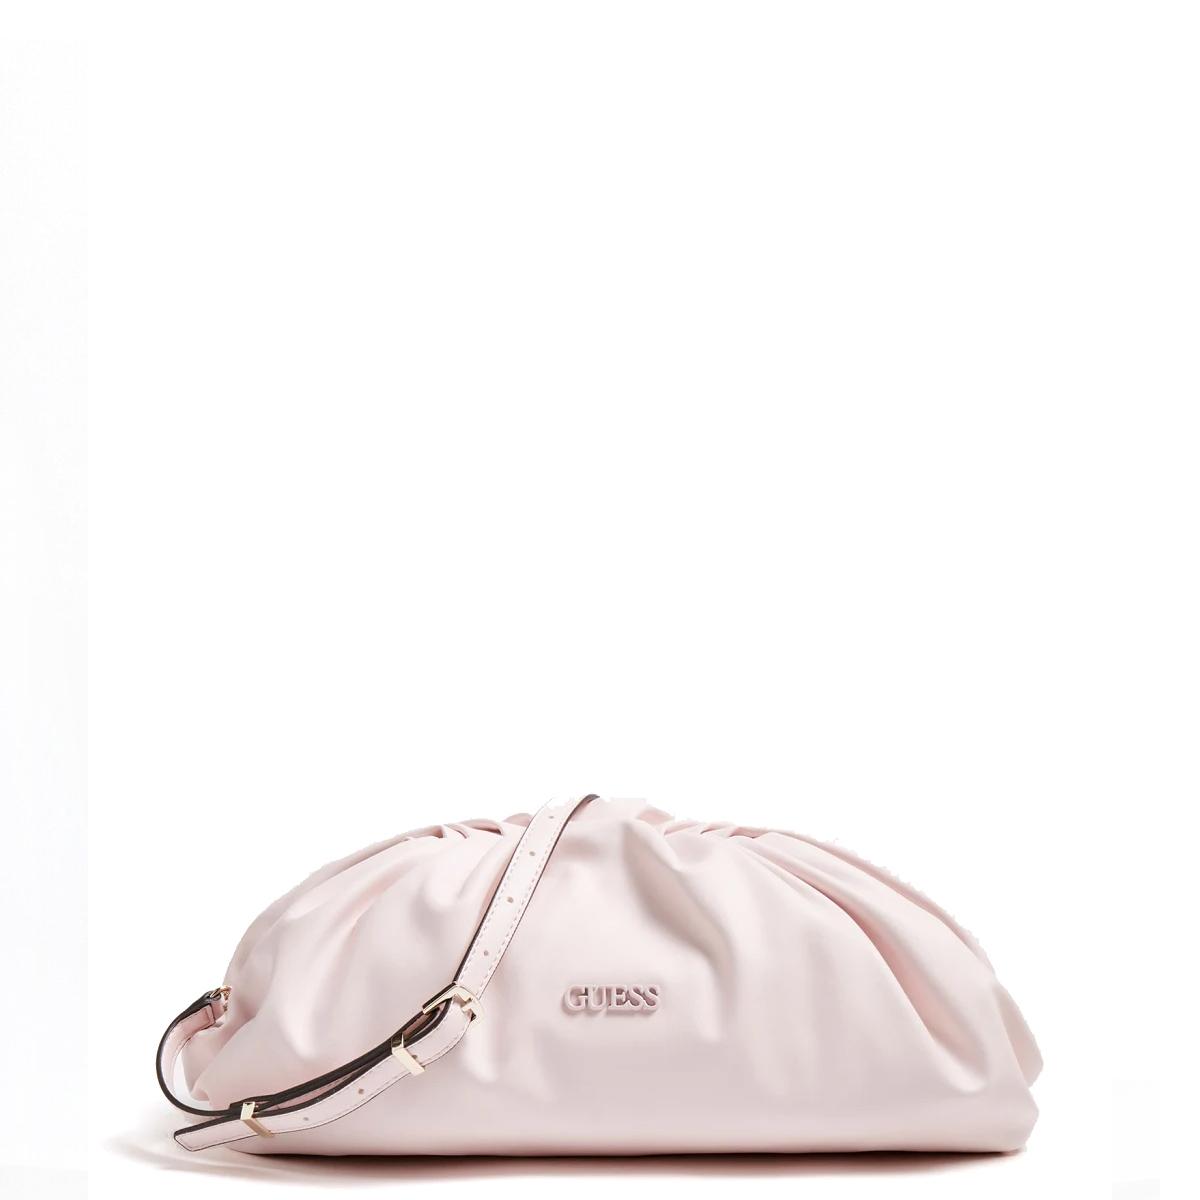 Guess Women's Pink Bag